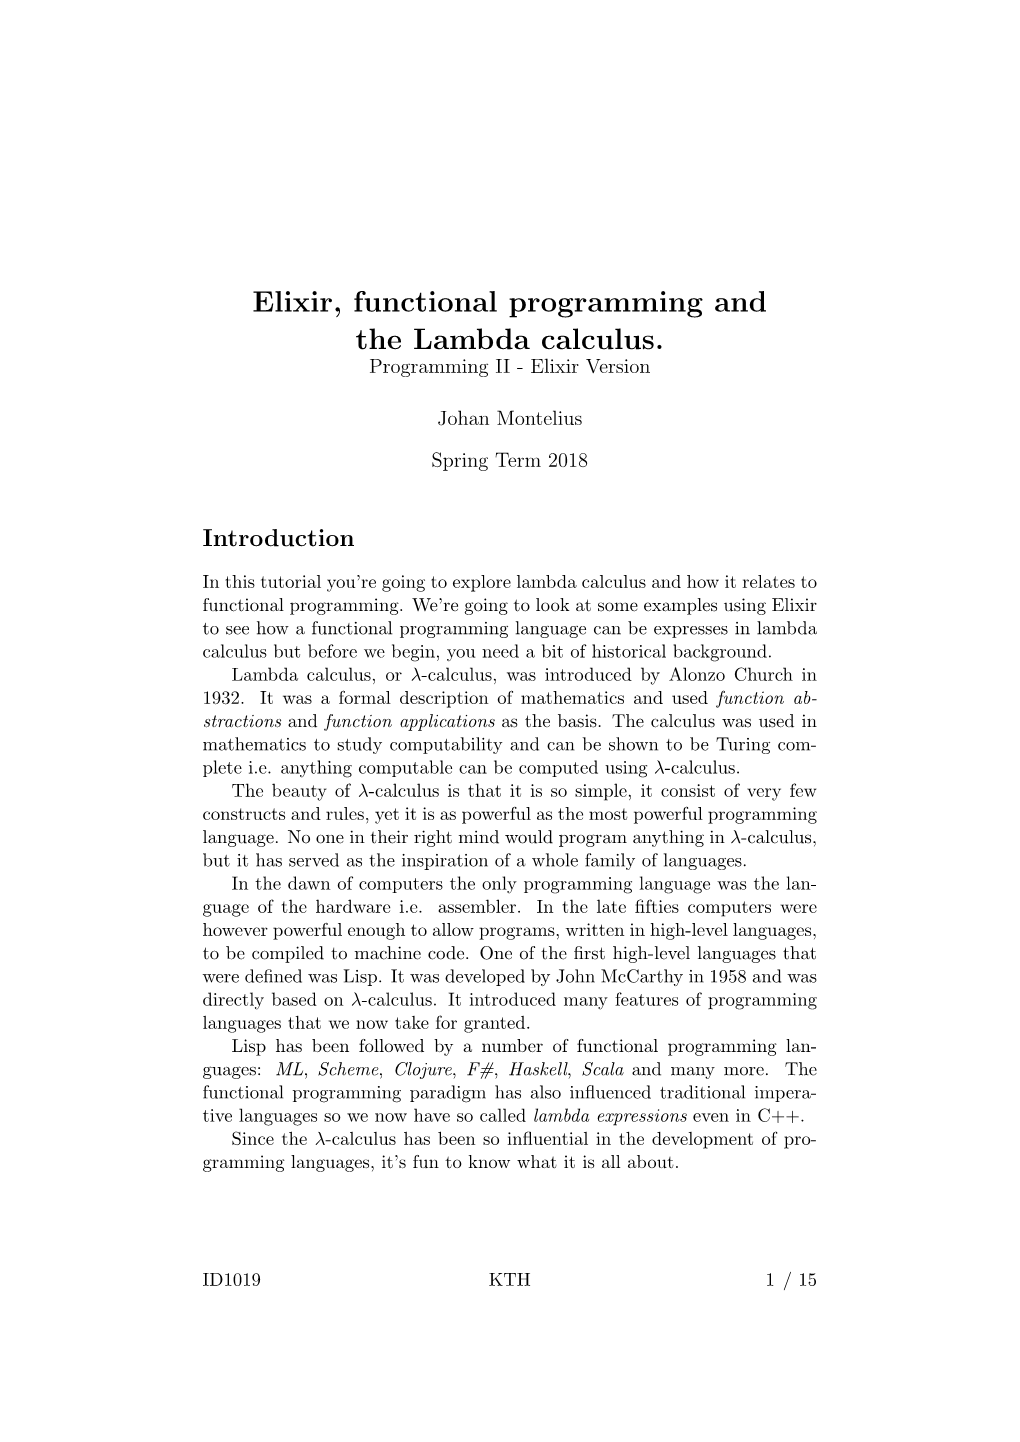 Elixir, Functional Programming and the Lambda Calculus. Programming II - Elixir Version